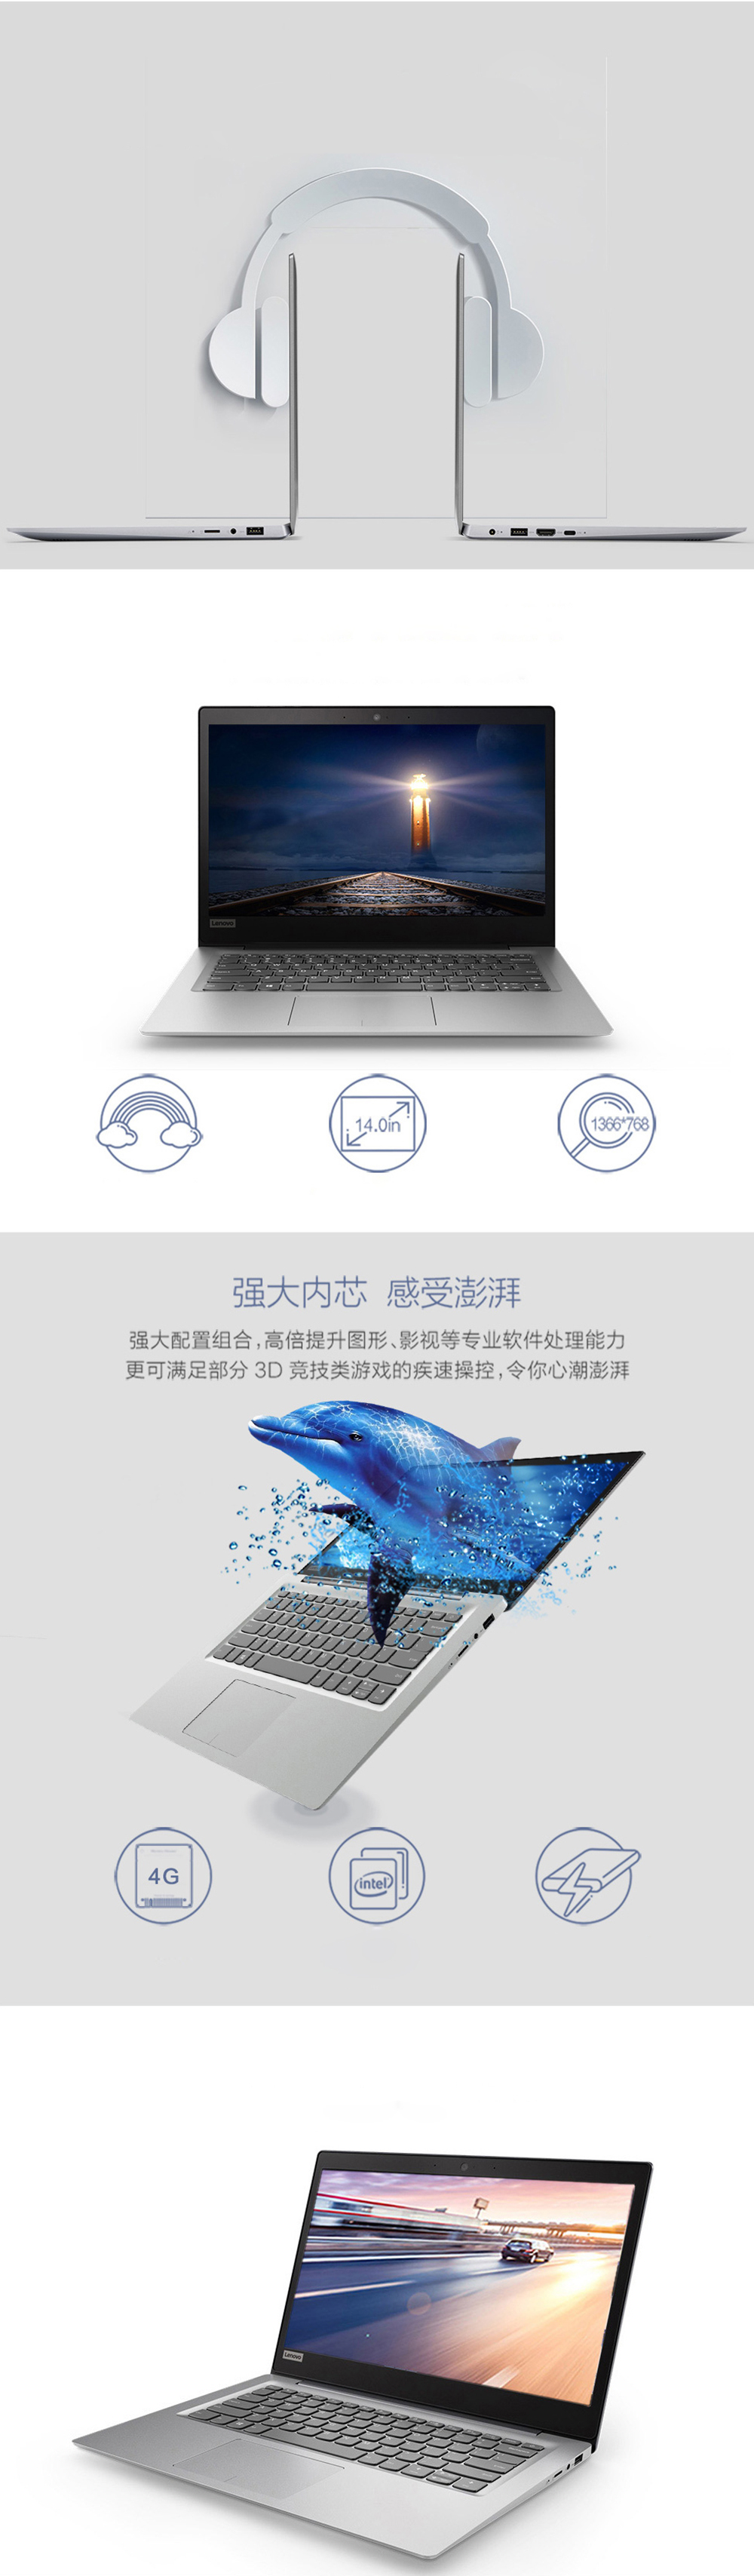 Lenovo Laptop Ideapad 120s 14.0 Inch Intel Celeron N3350 4GB RAM 128GB ROM Integrated Graphics